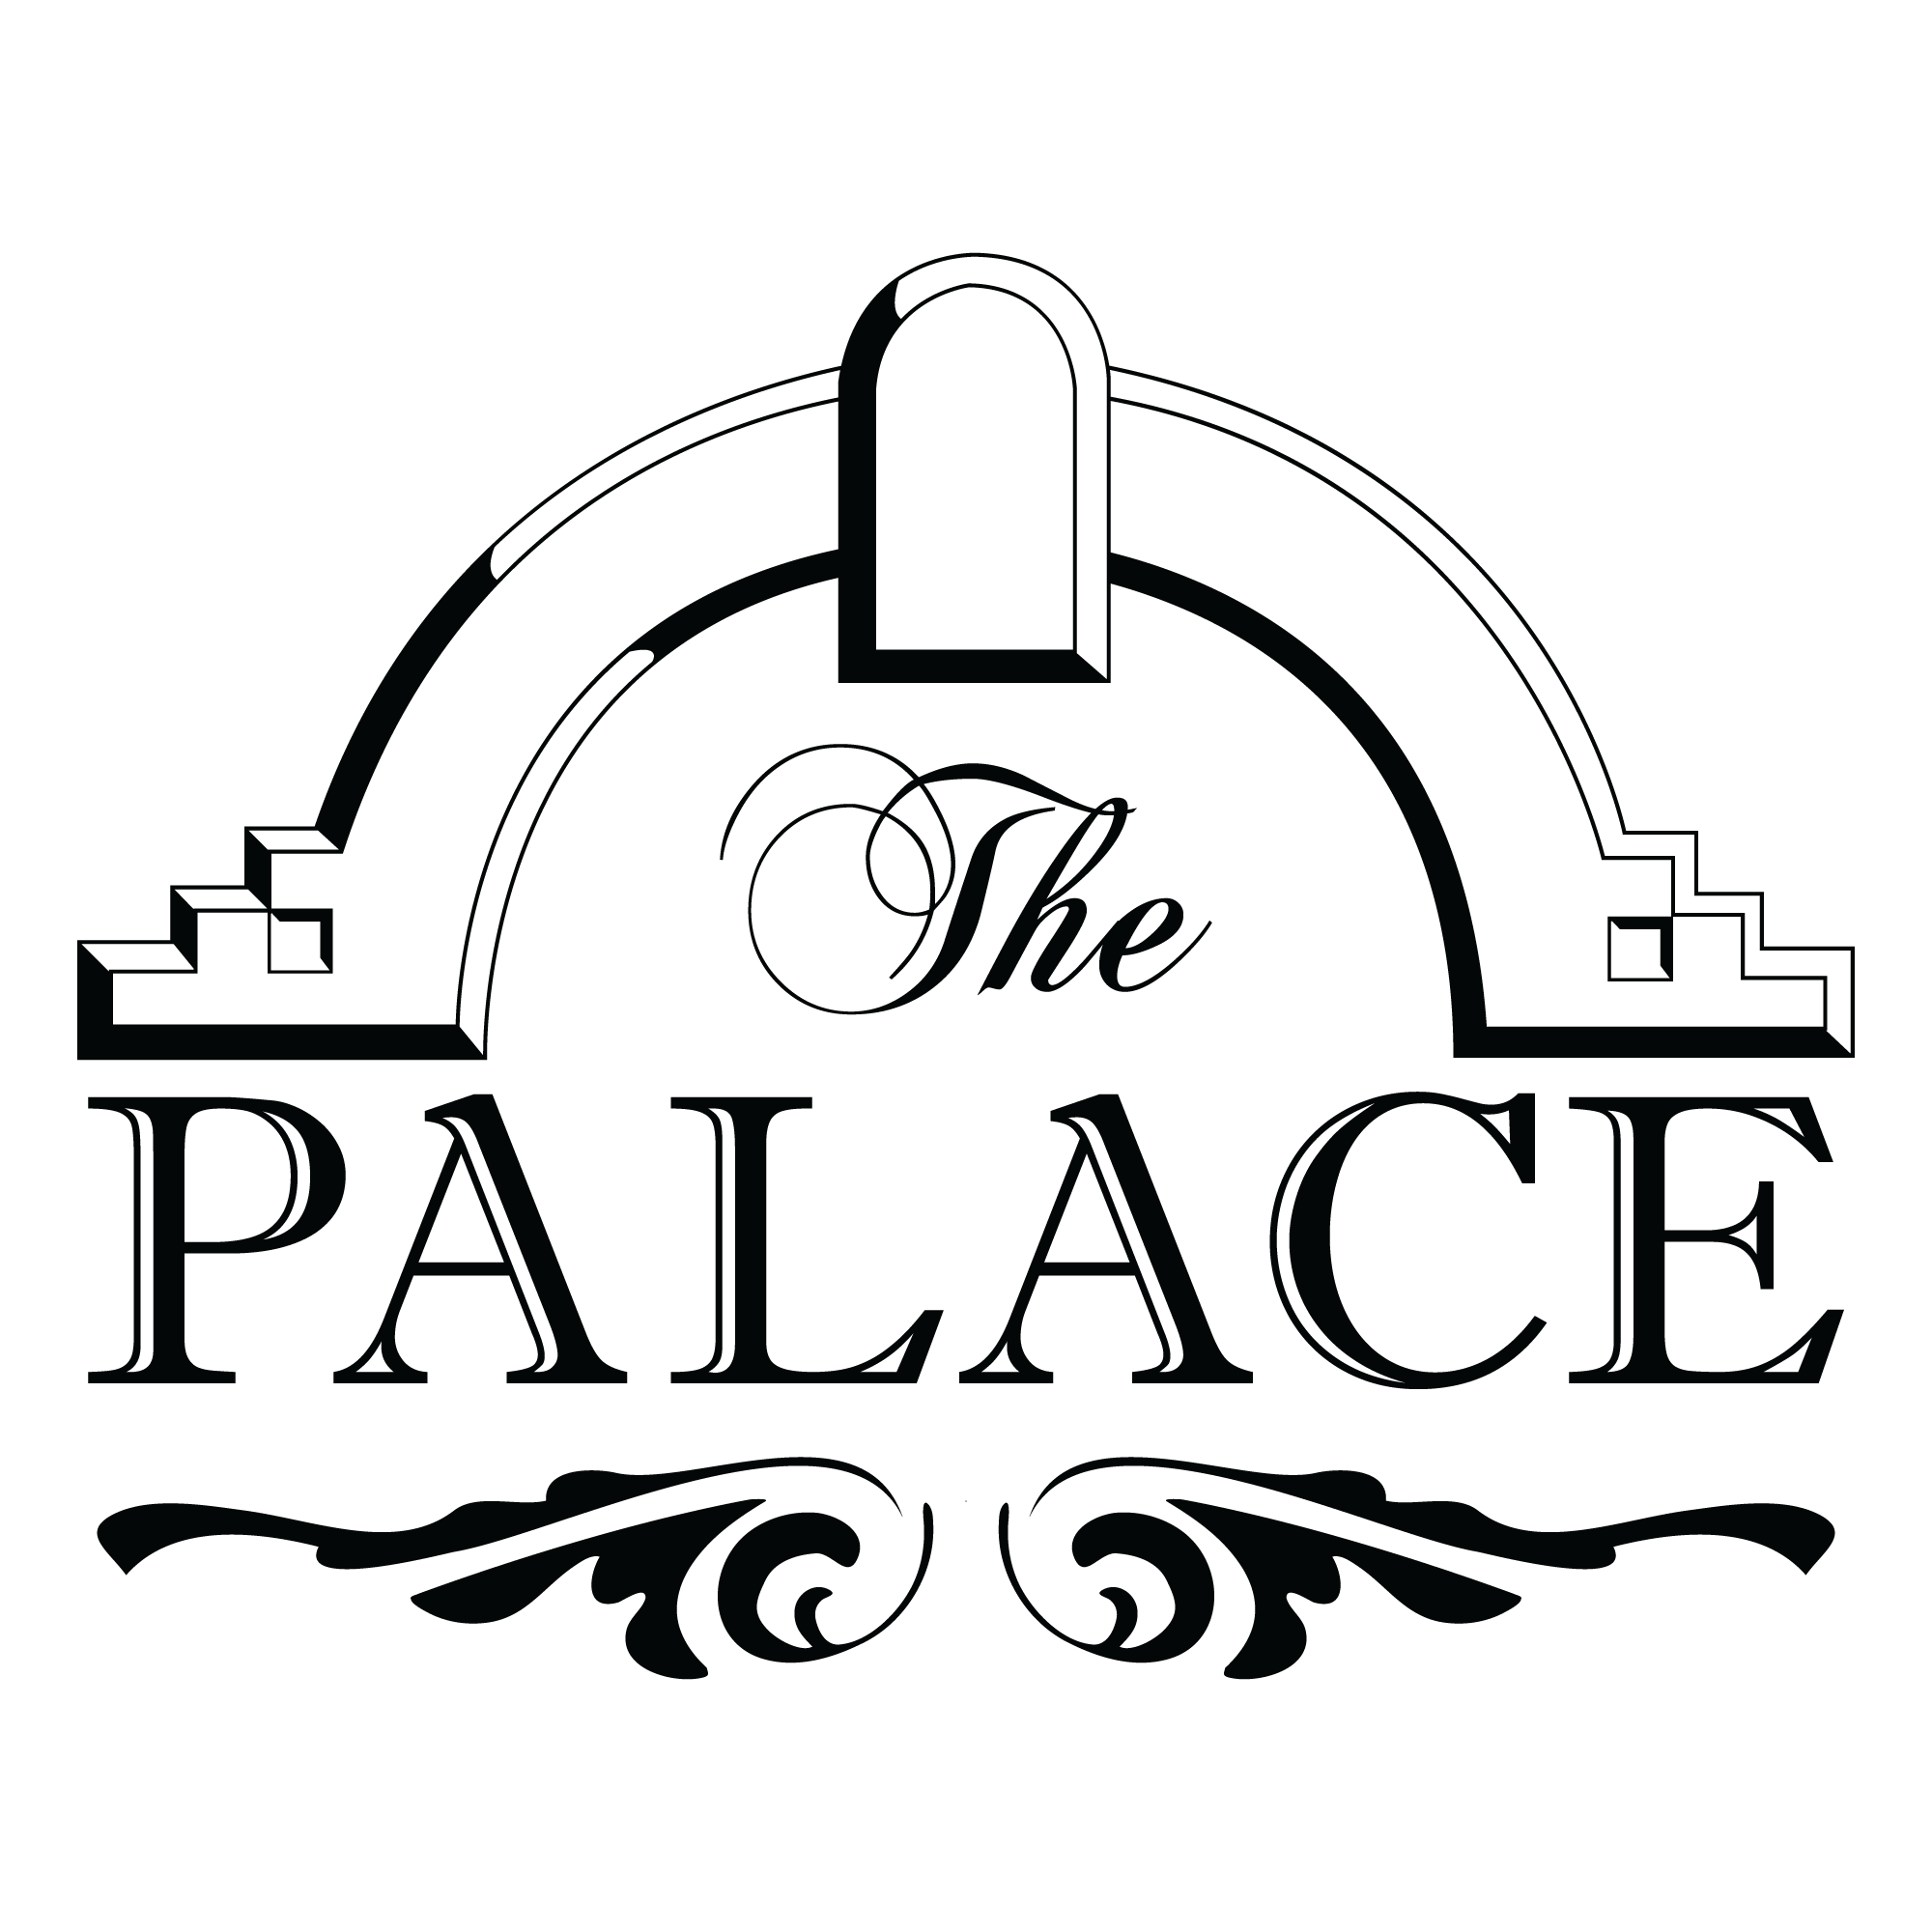 A1 The Palace (fiesta inaugural)